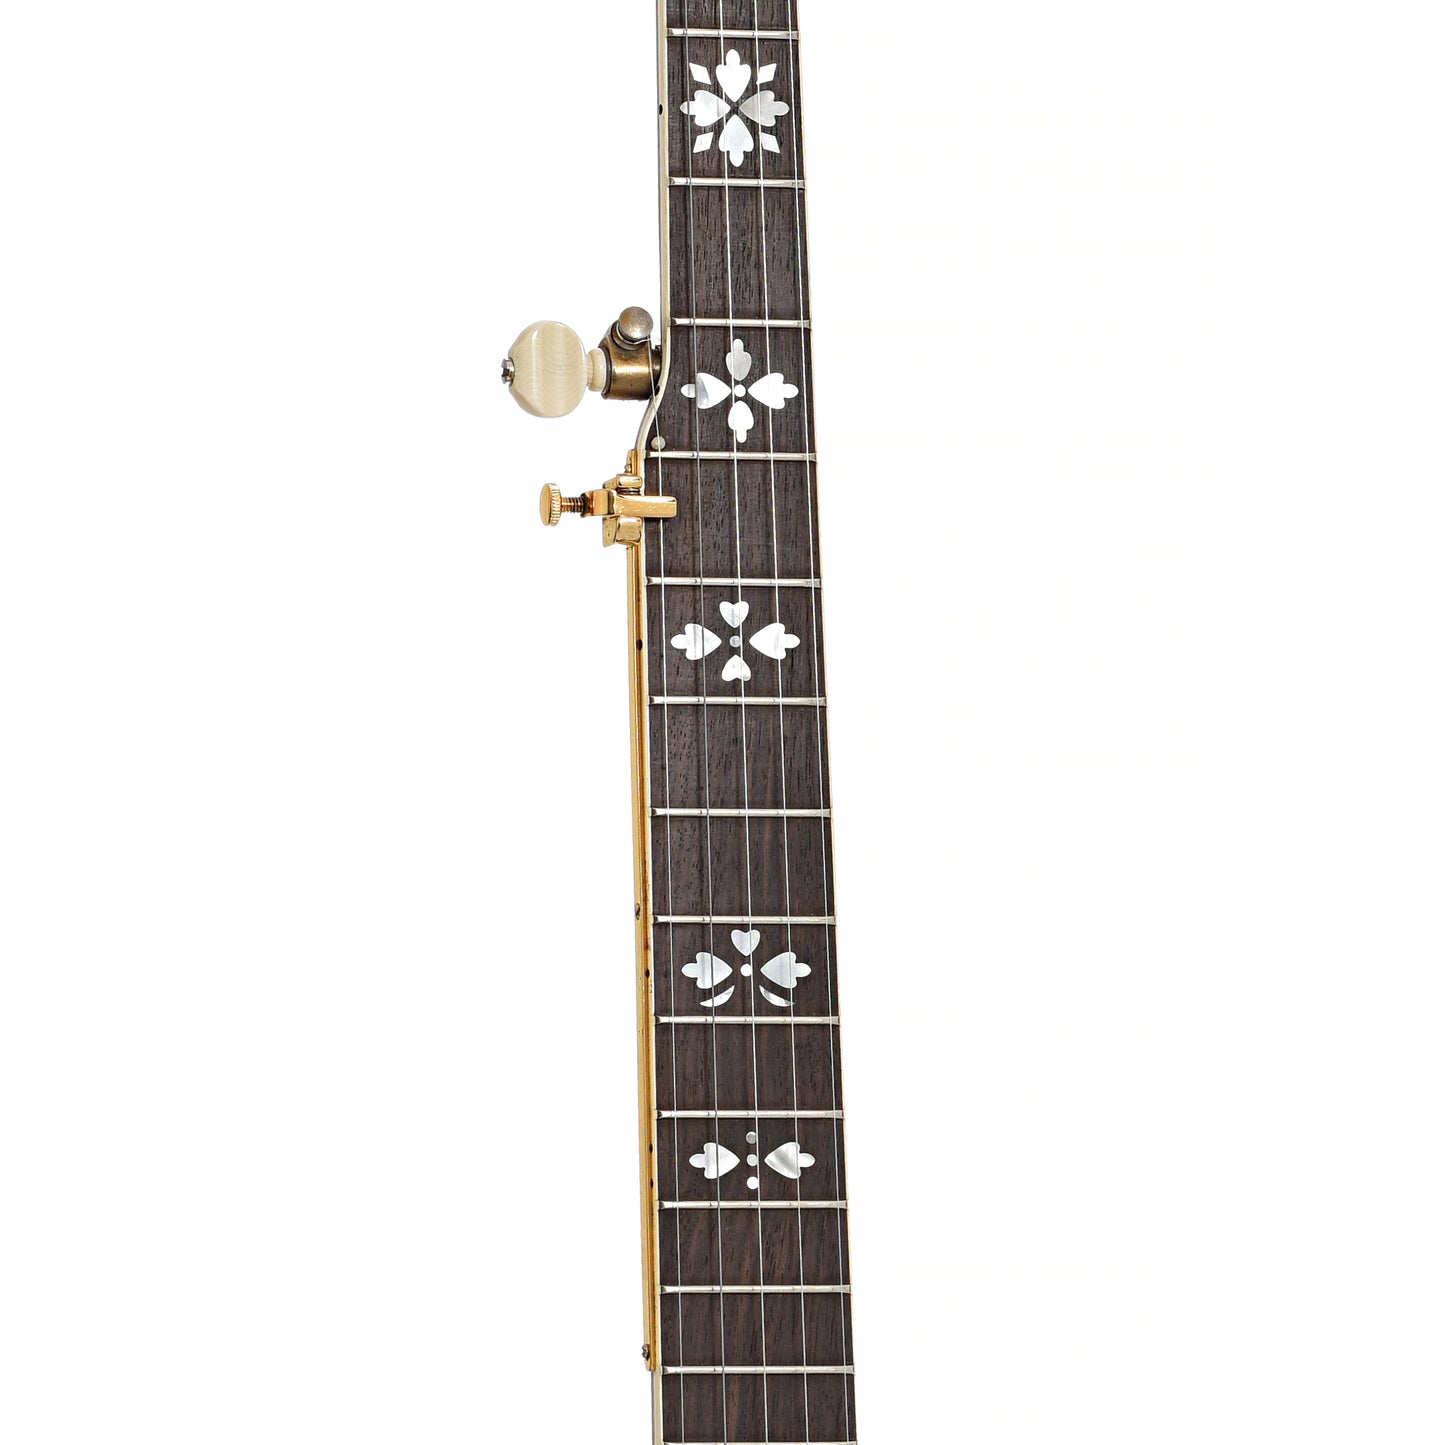 Fretboard of Gibson Granada (2005)